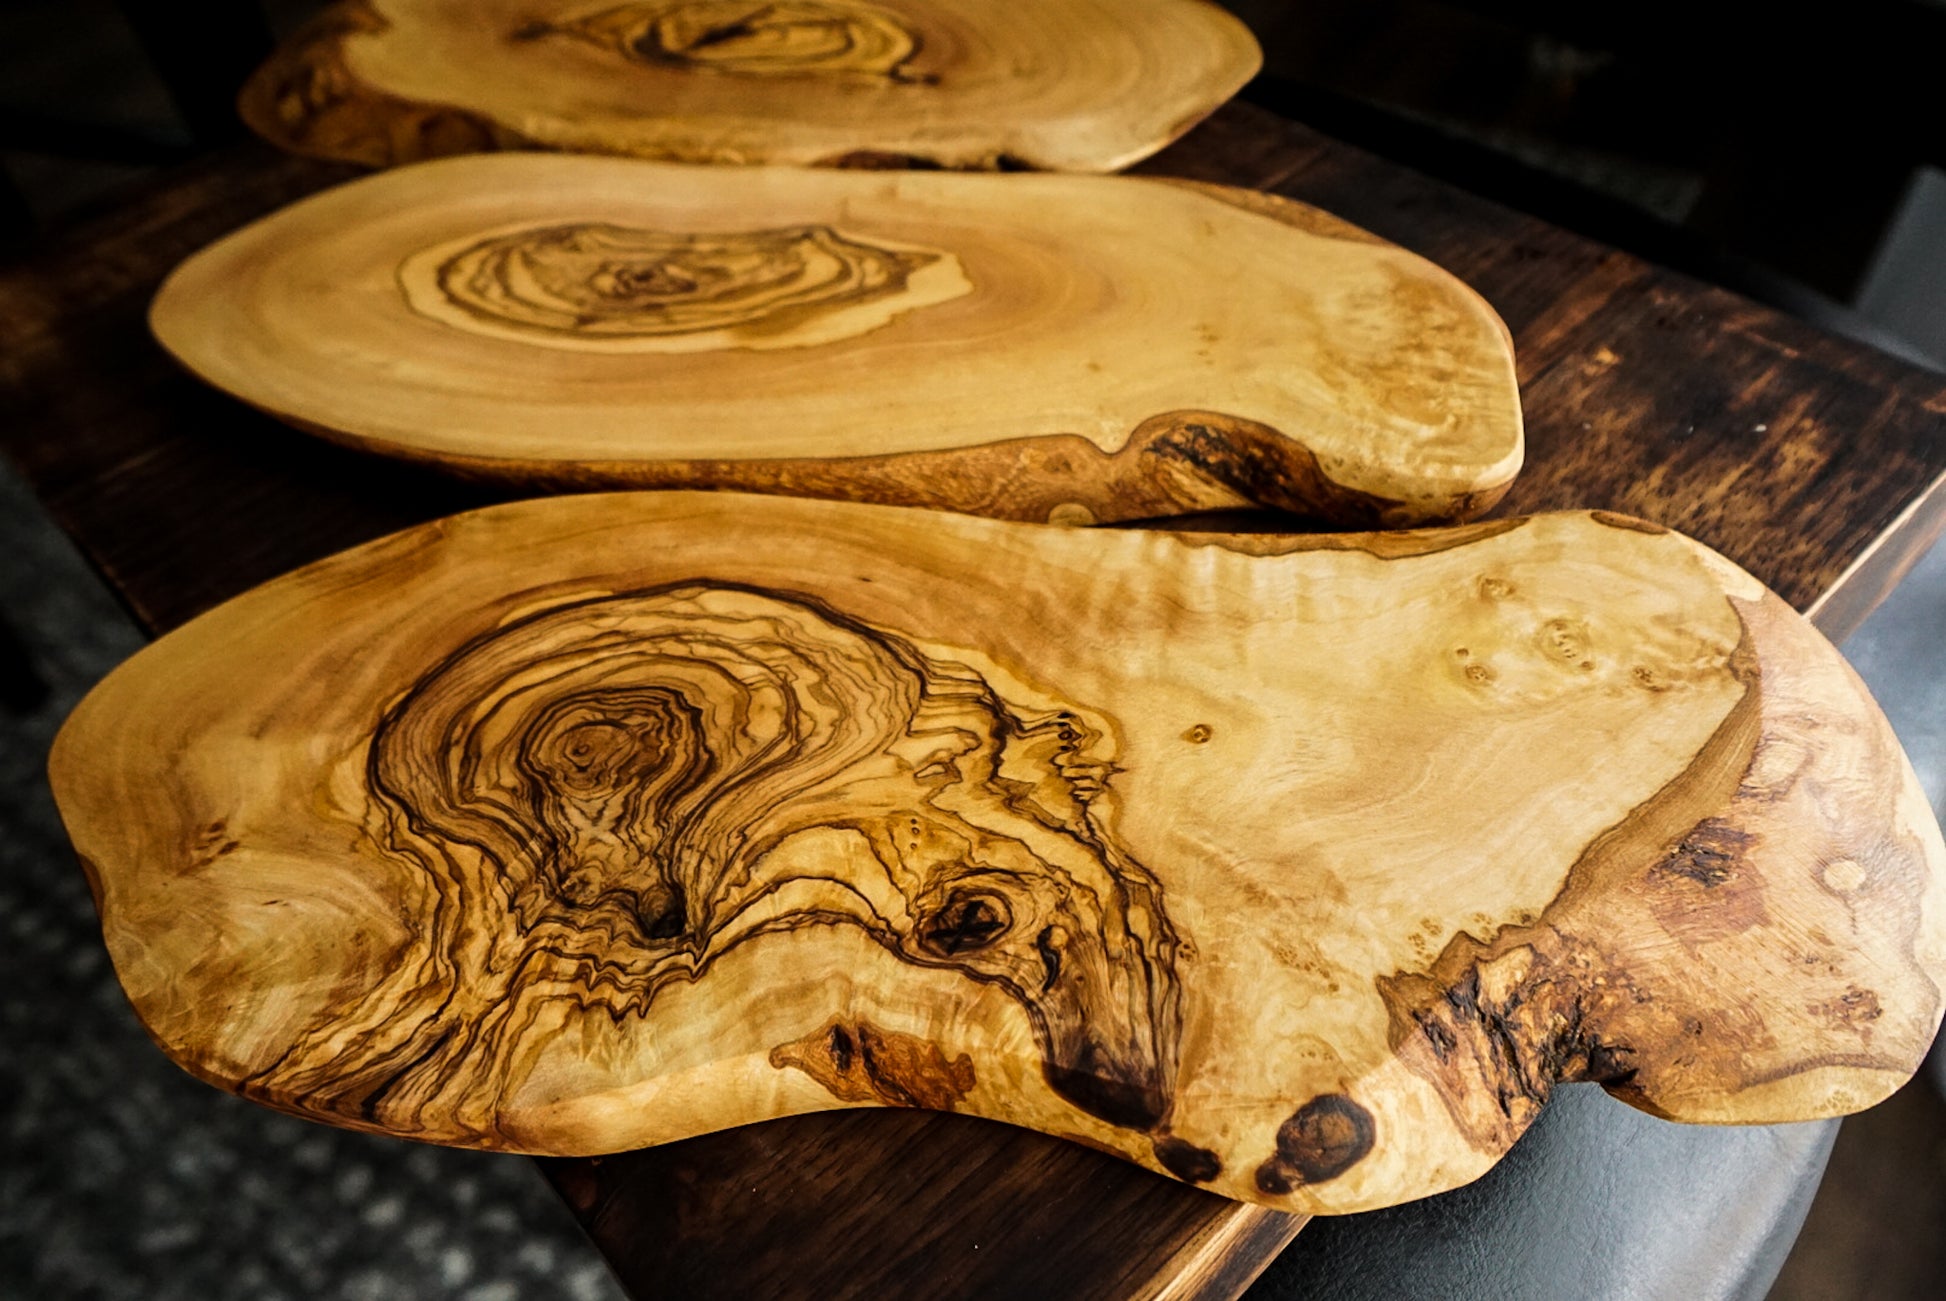 Custom Natural Edge Cutting Board, Rustic Olive Wood Charcuterie Board,  Rustic Cheese Board, Rustic Bread Board, Extra Wood Board Home Decor